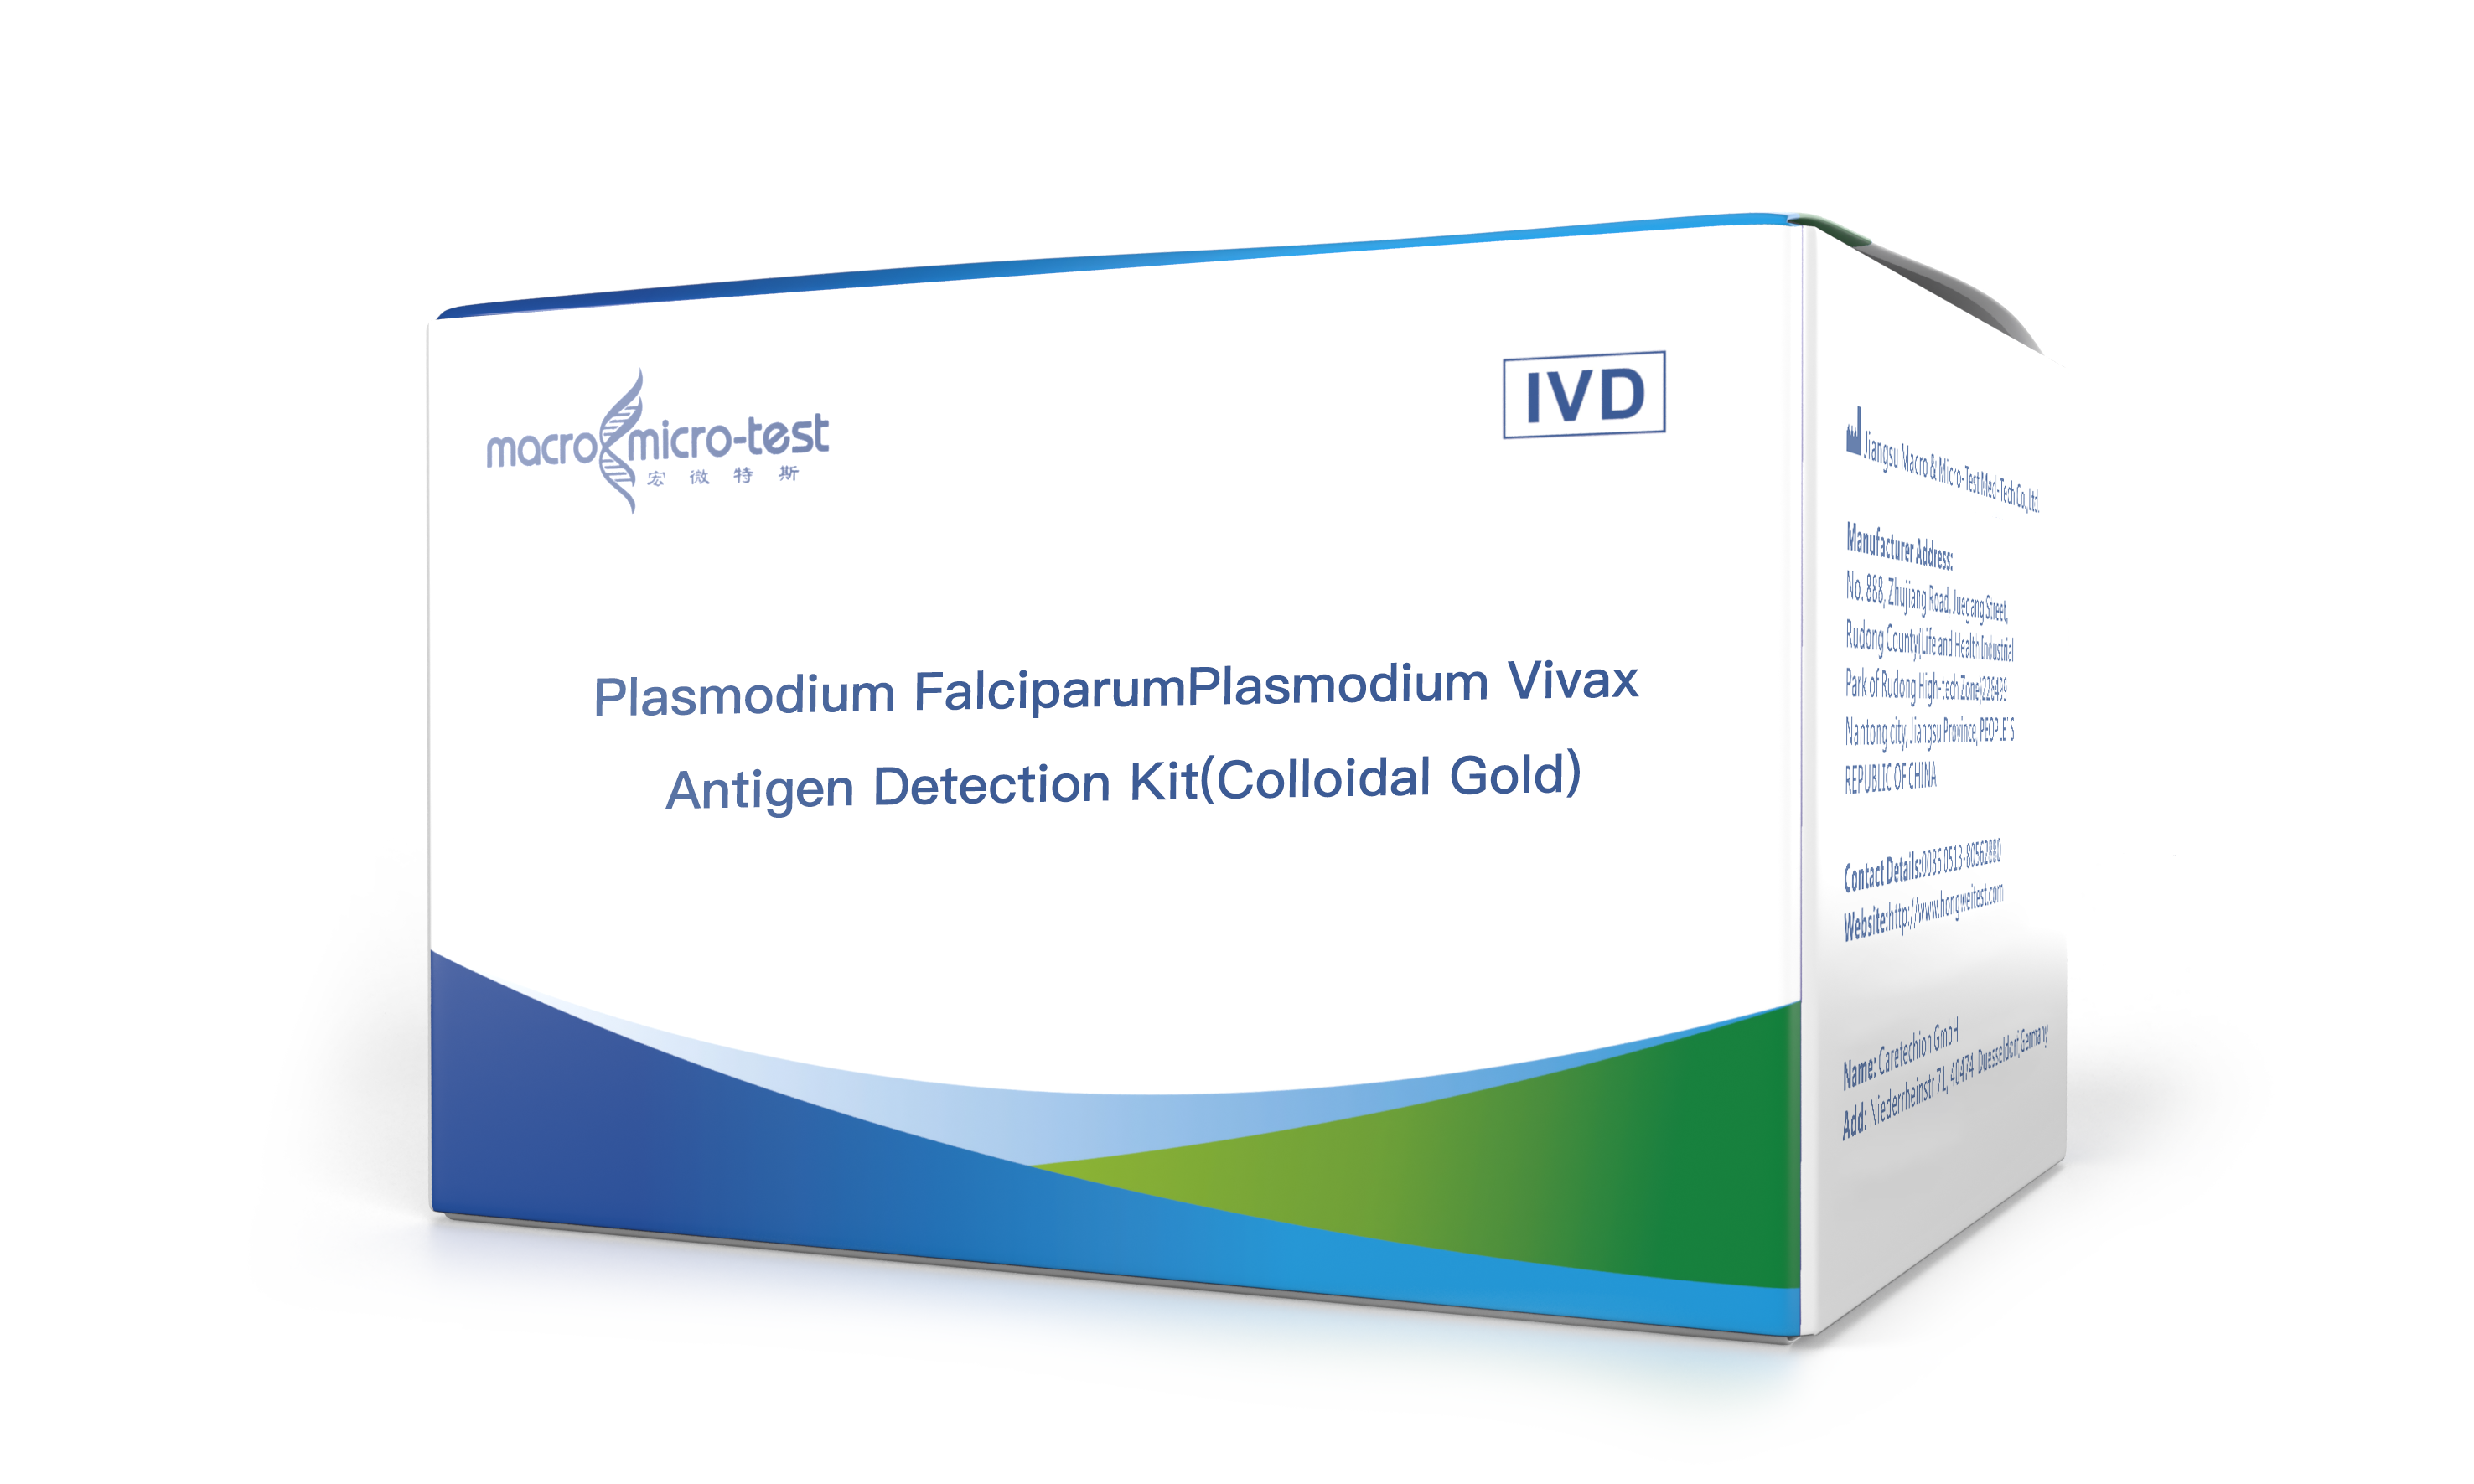 Hot sale Malaria Test - Plasmodium Falciparum/Plasmodium Vivax Antigen Detection Kit(Colloidal Gold)  – Macro & Micro-Test